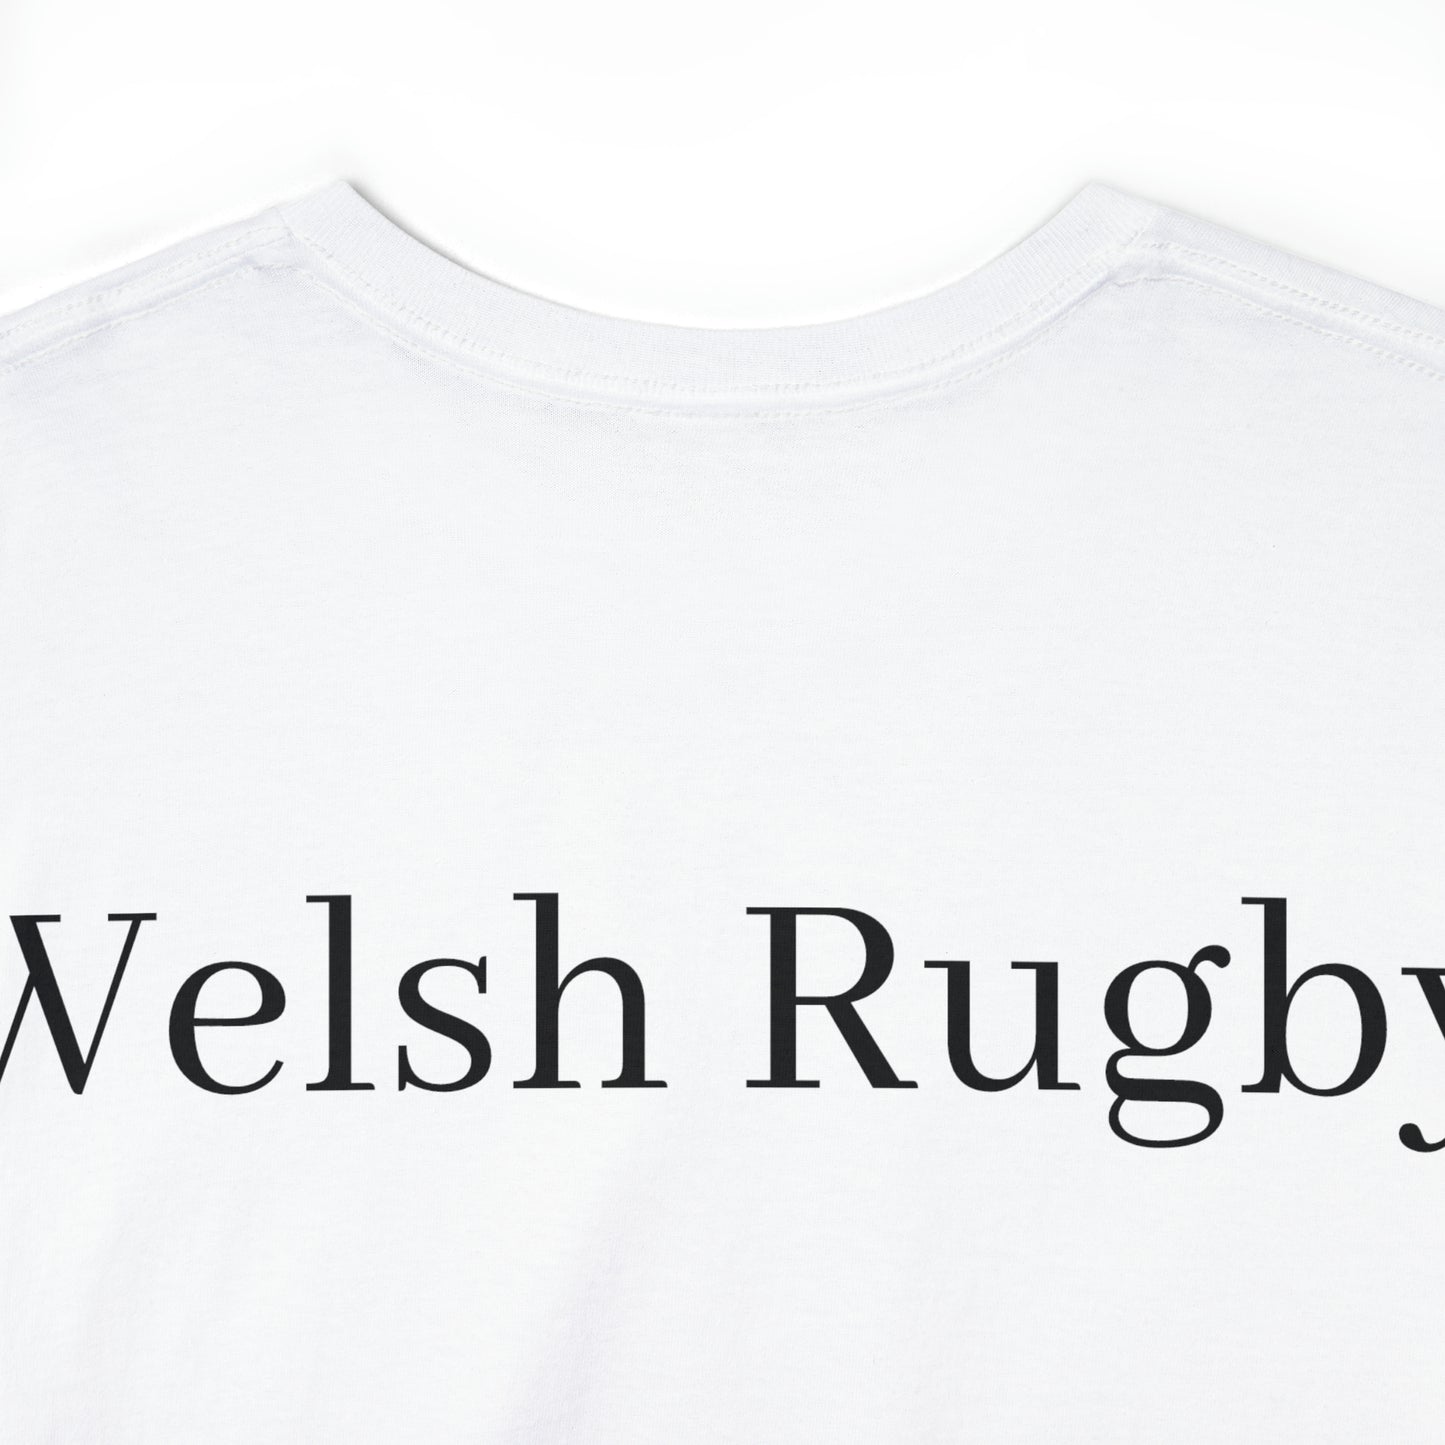 Wales Lifting RWC - light shirts